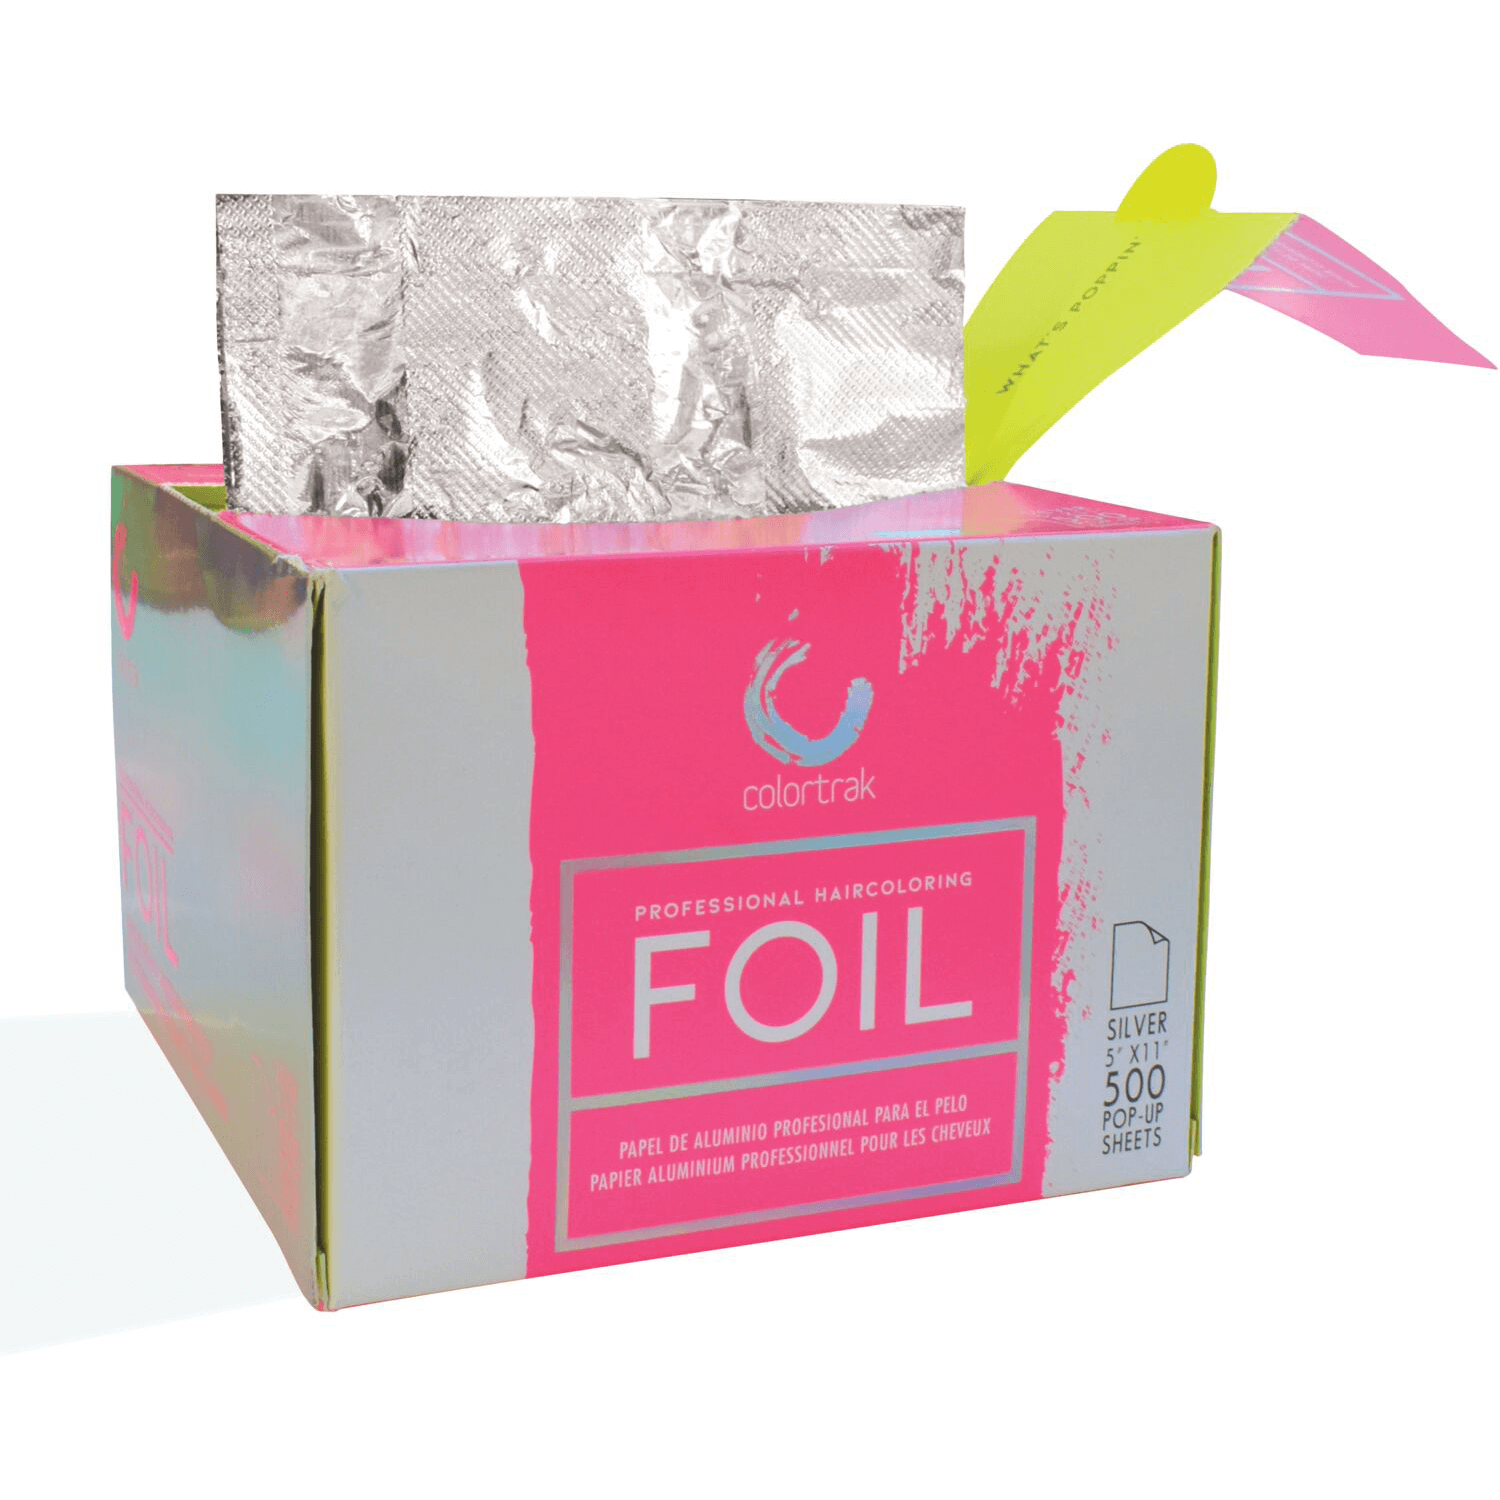 FASTFOILS 5 x 12 Inches Pre Cut Foils - Lightweight Hair Foils for  Highlighting - 75 Sheets